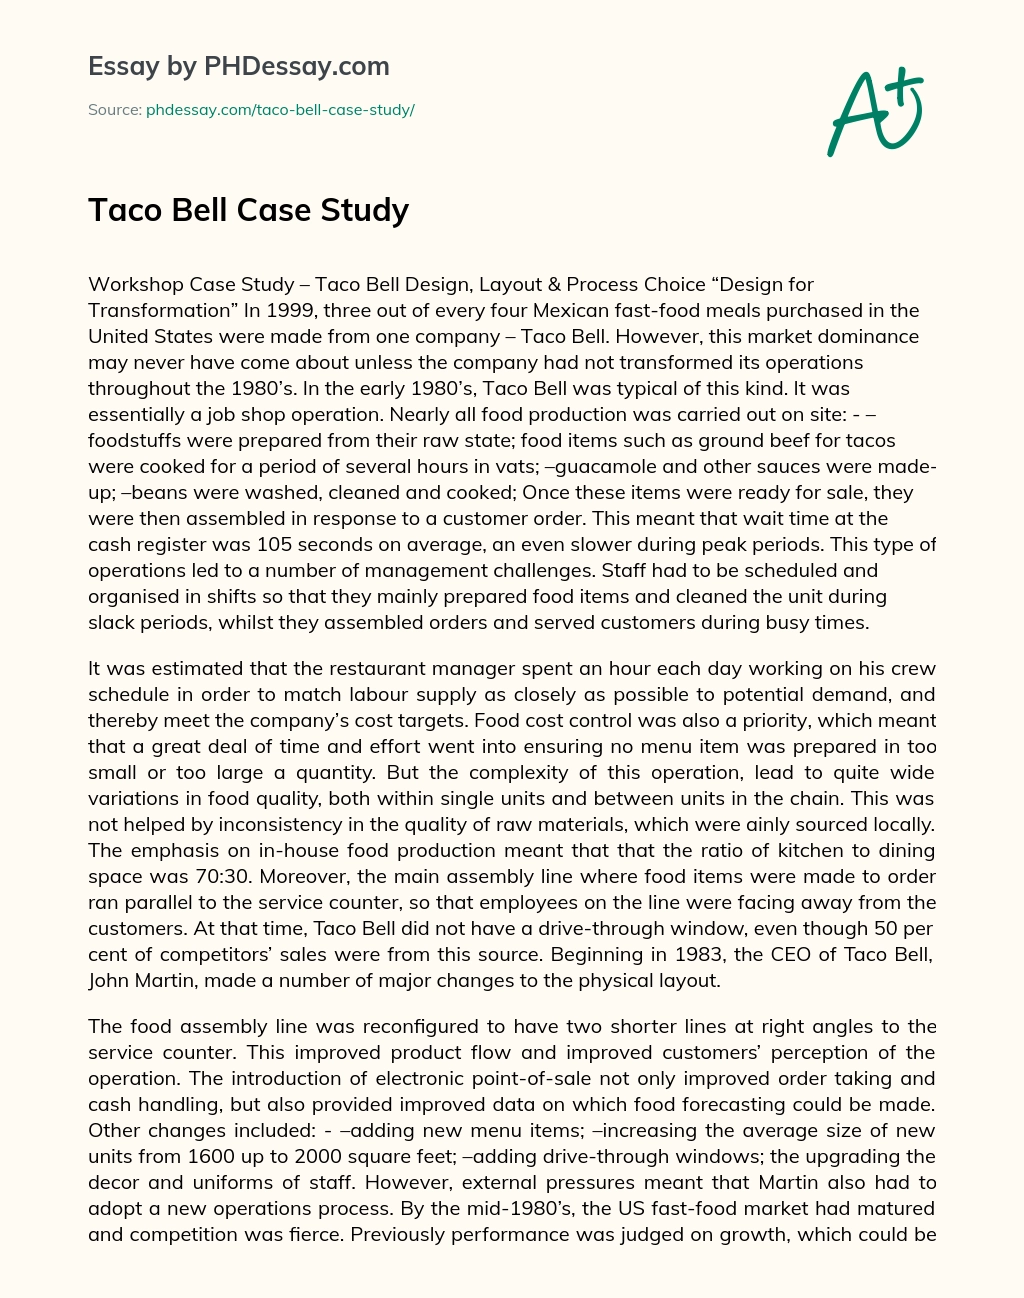 Taco Bell Case Study essay